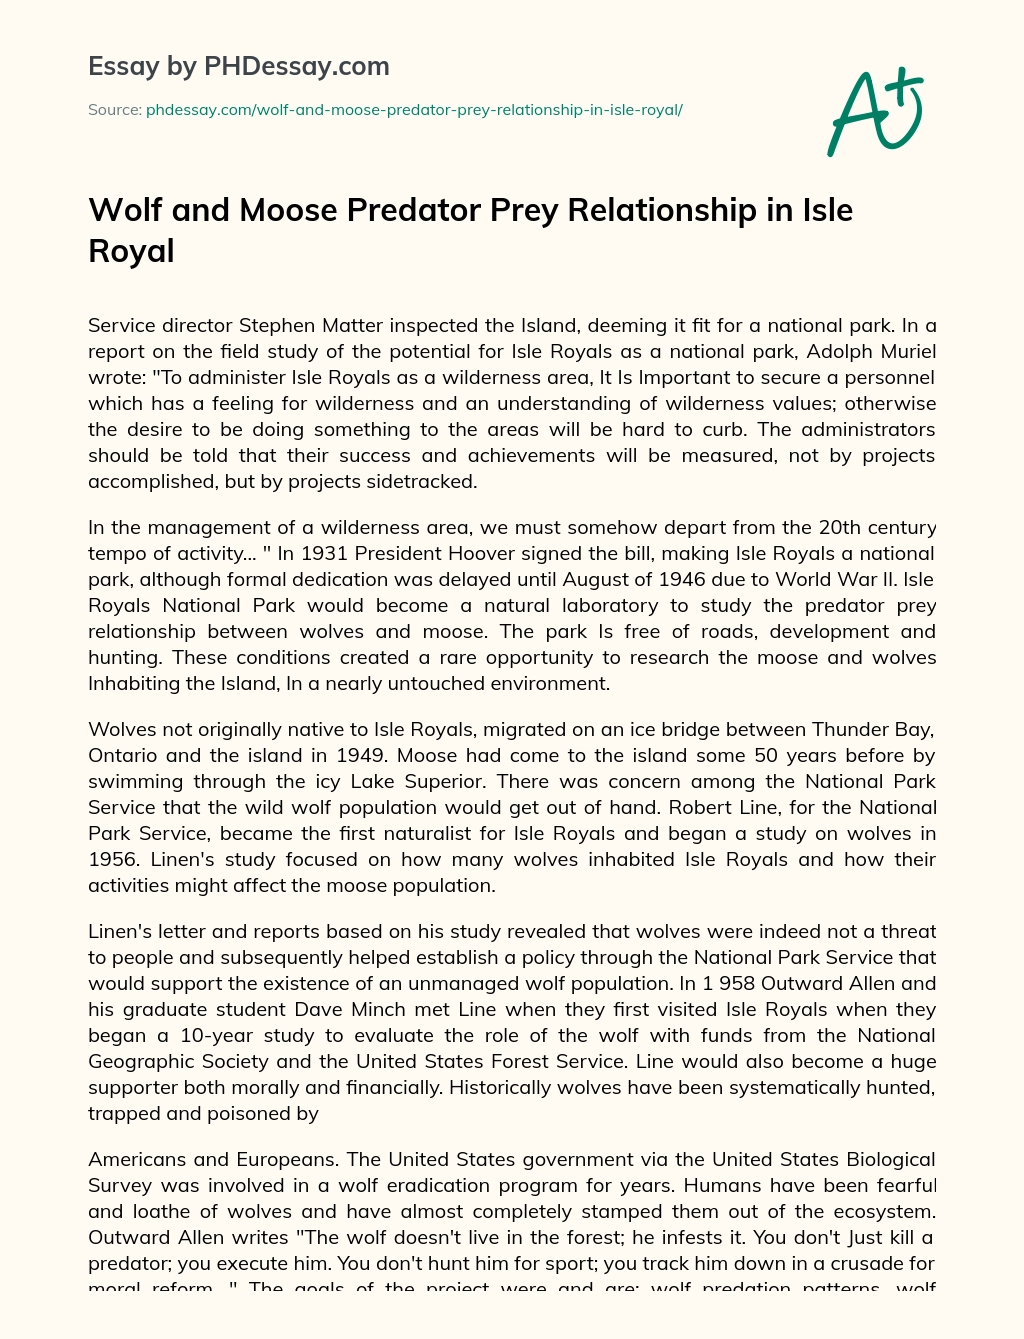 Wolf and Moose Predator Prey Relationship in Isle Royal essay